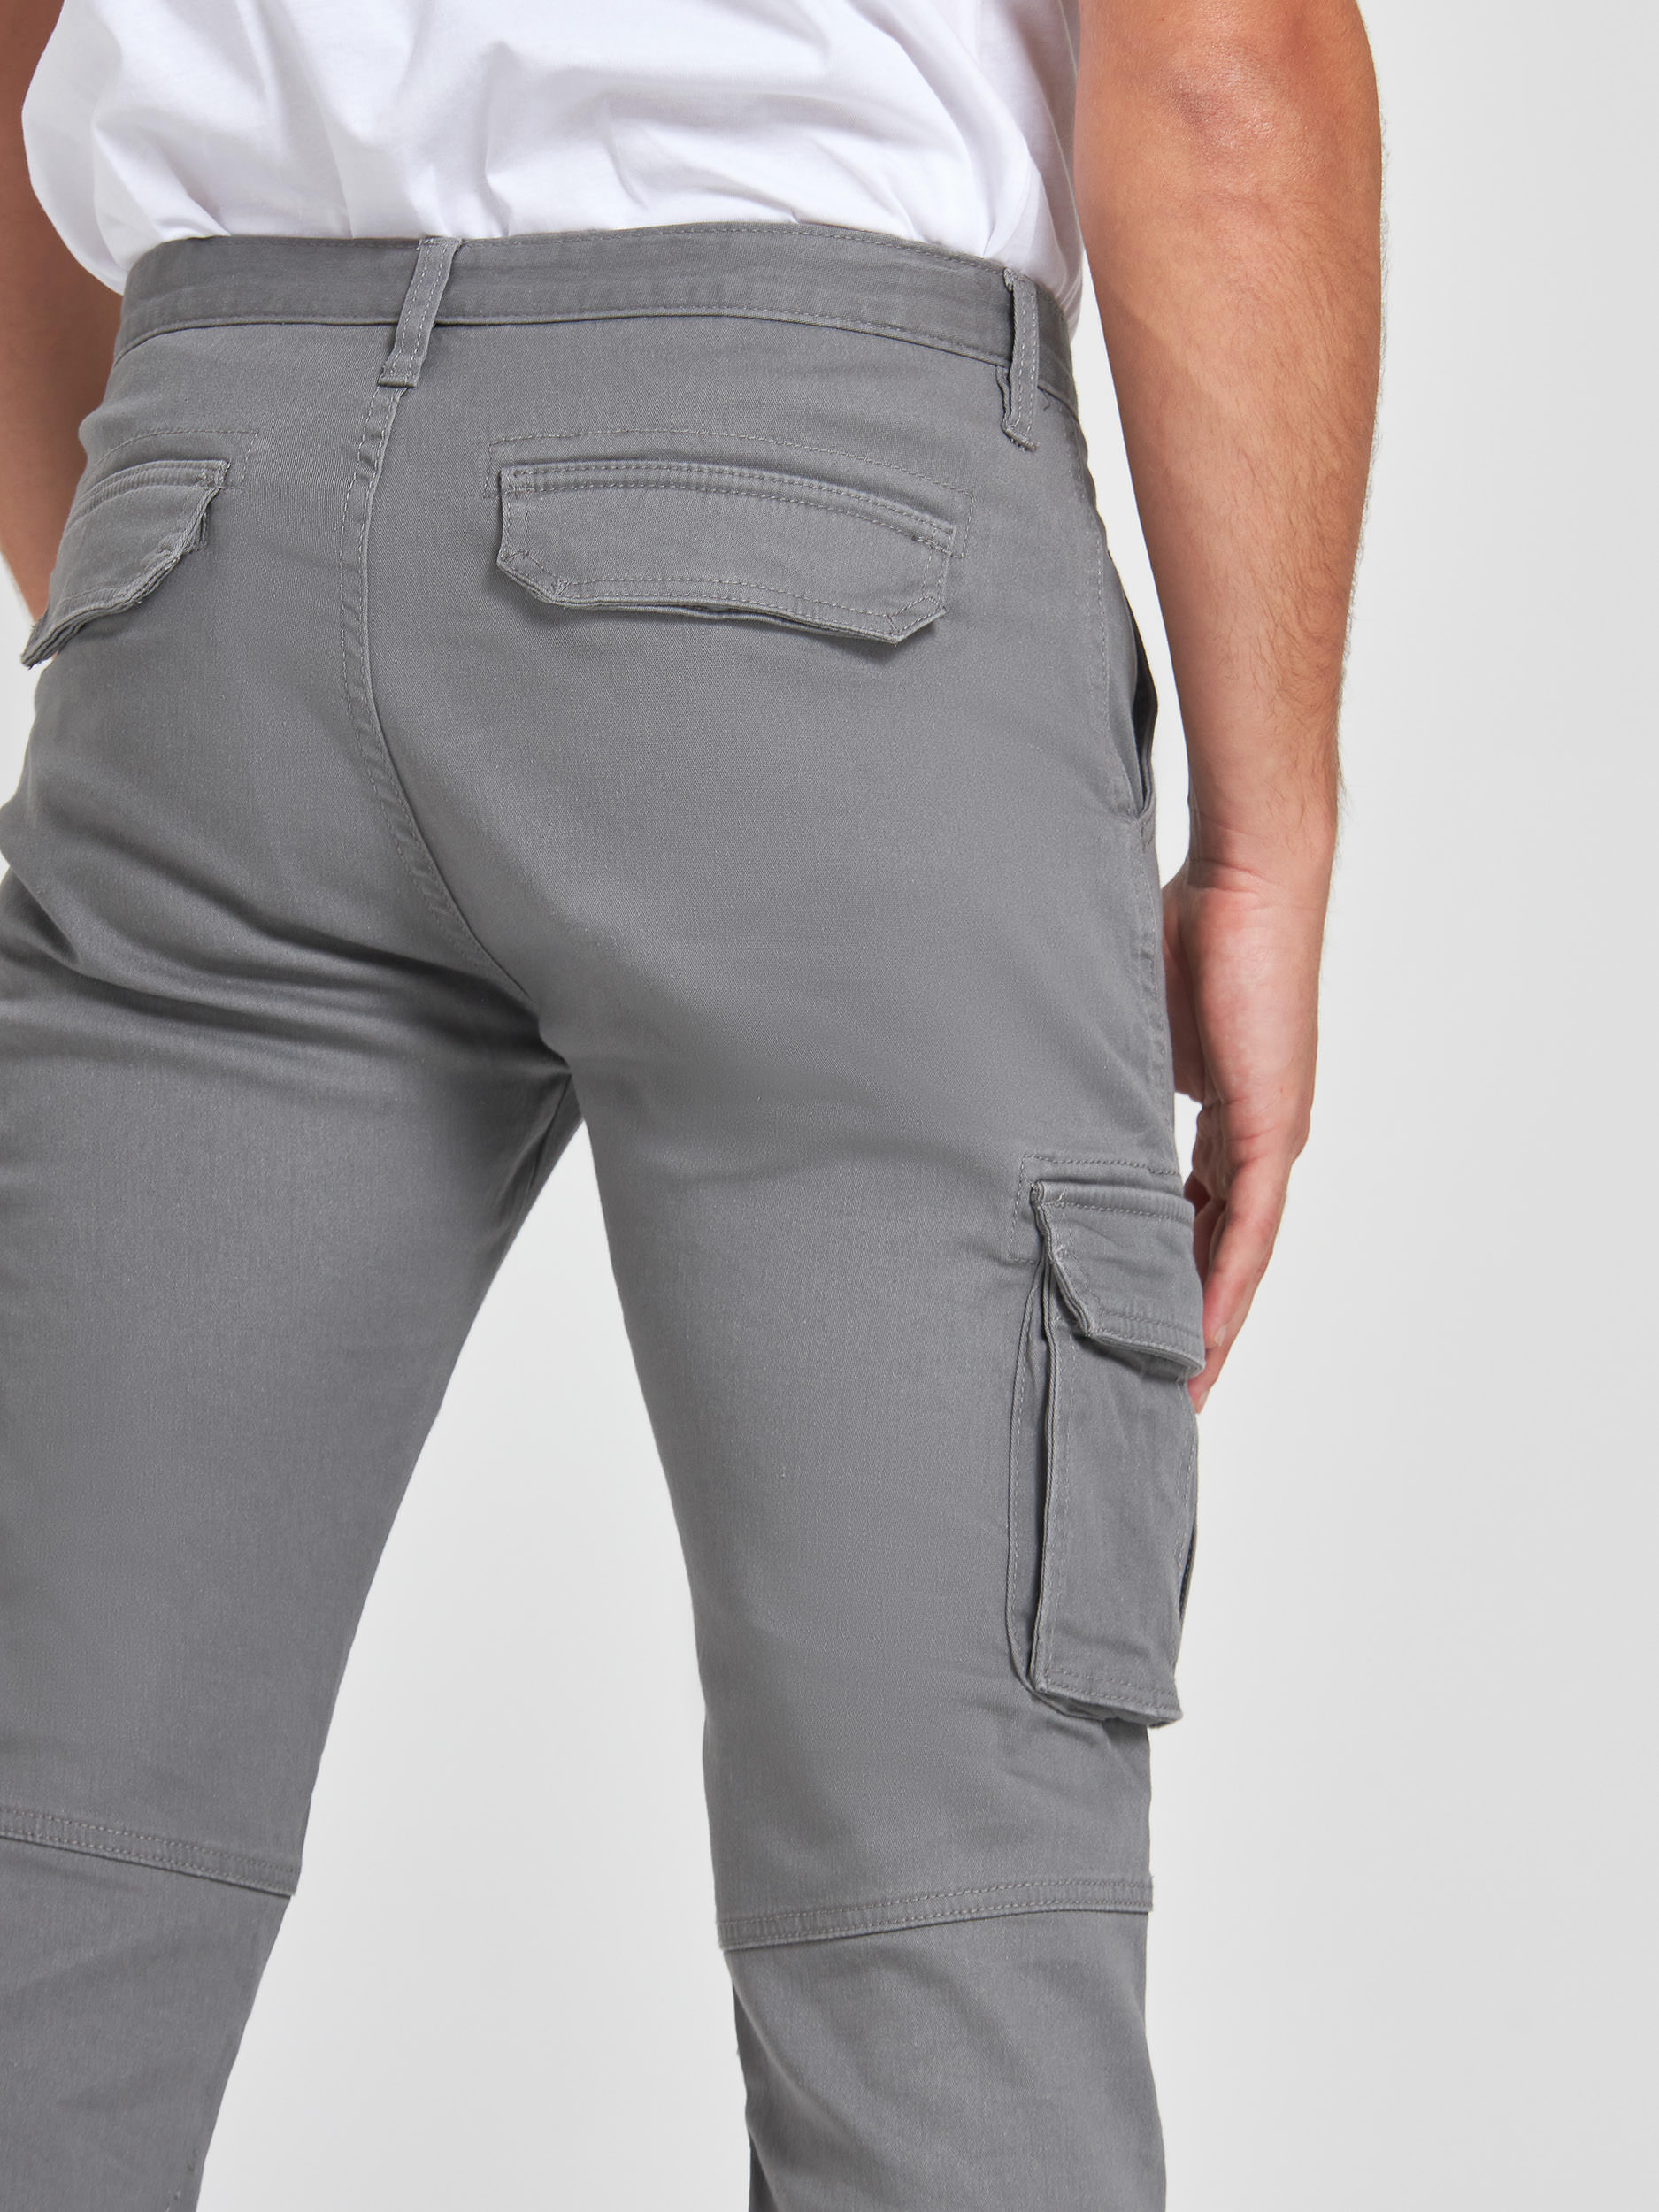 grey cargo trousers